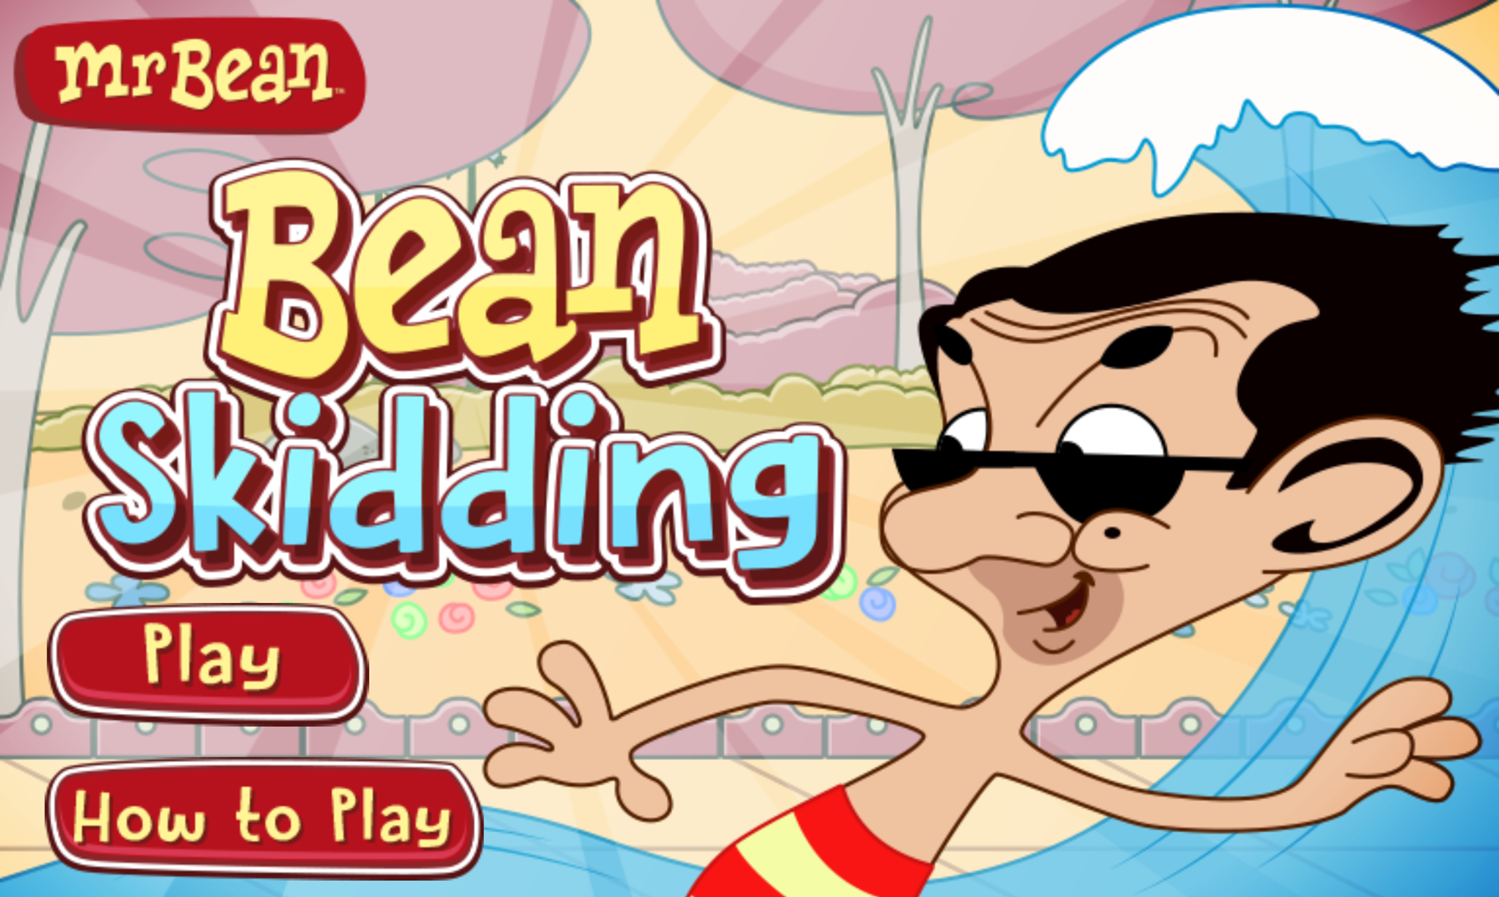 Mr. Bean's Bean Skidding Skateboarding Game Welcome Screen Screenshot.